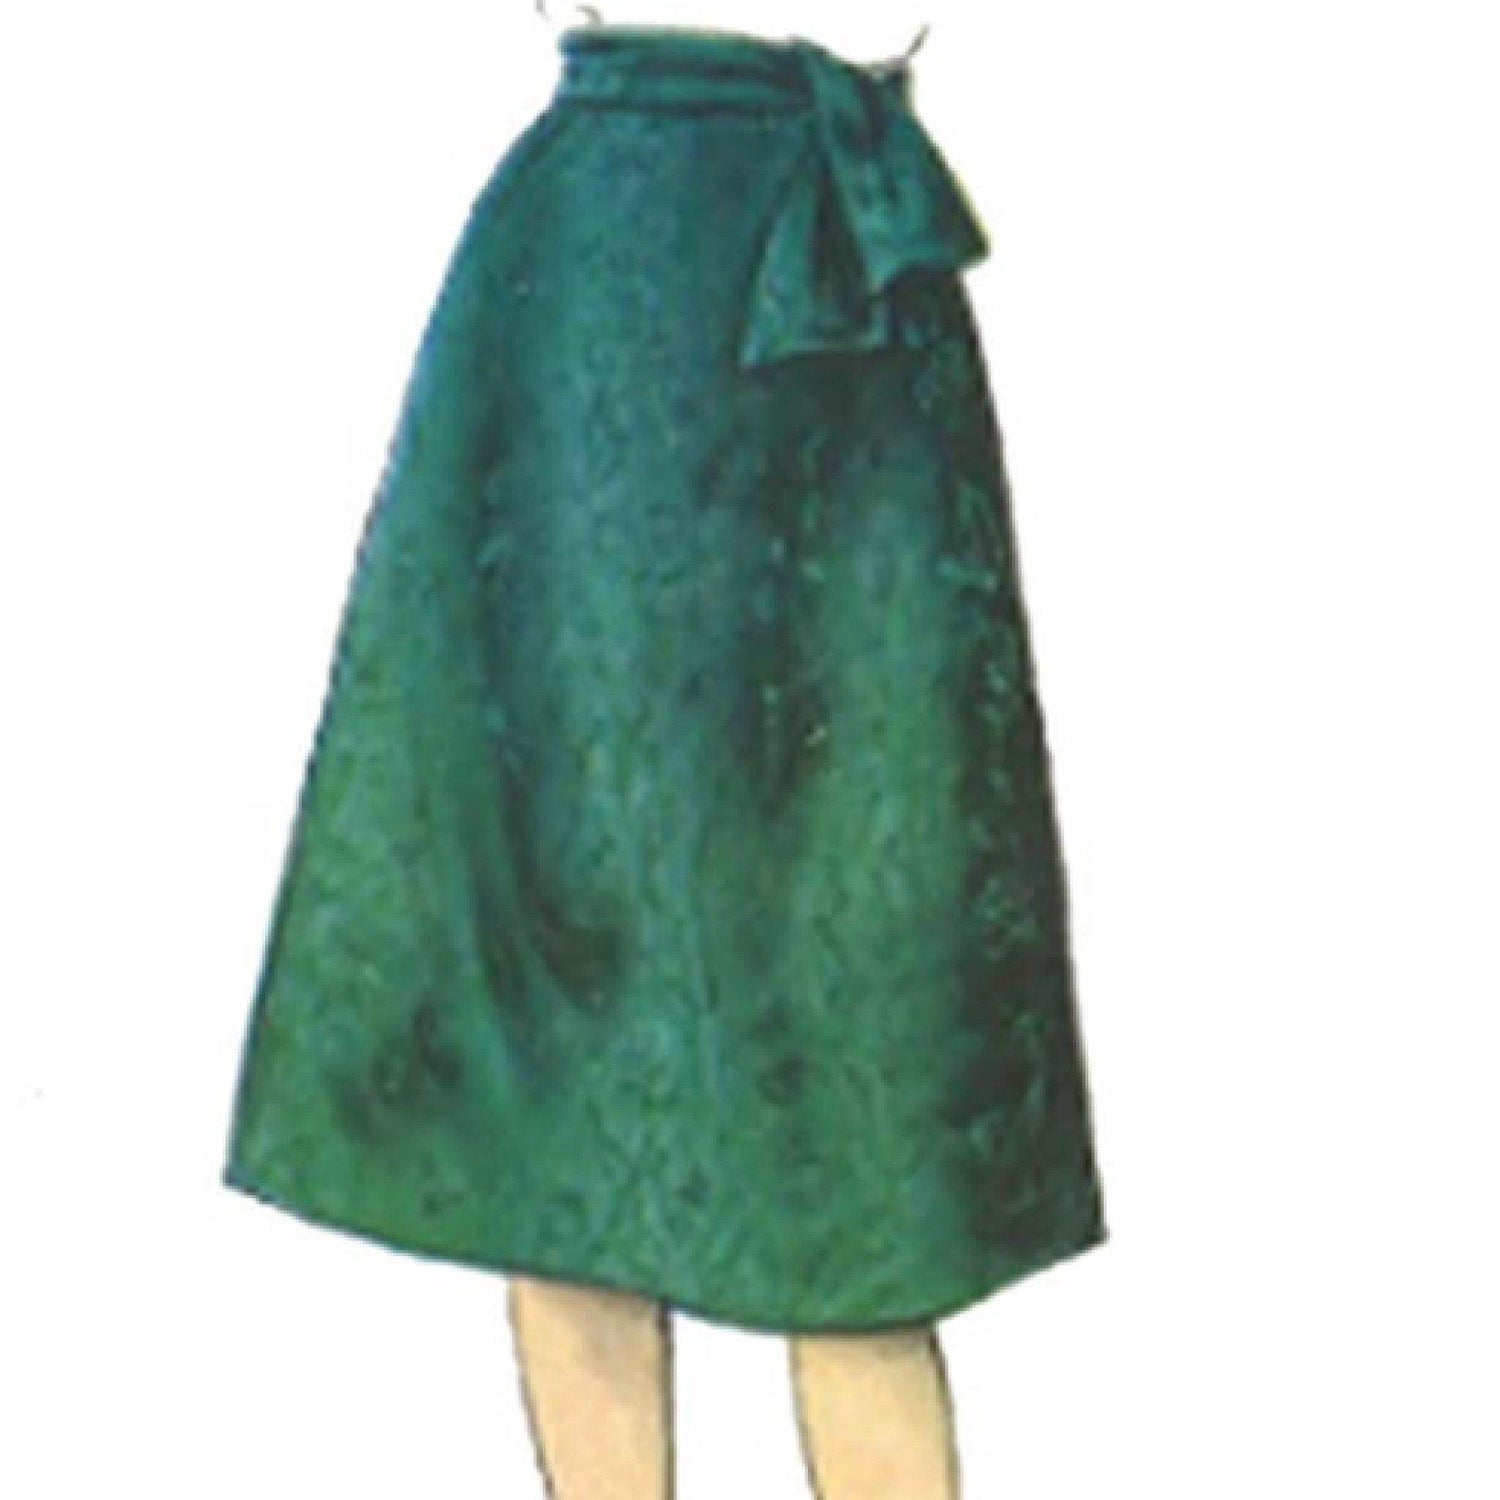 Woman wearing skirt